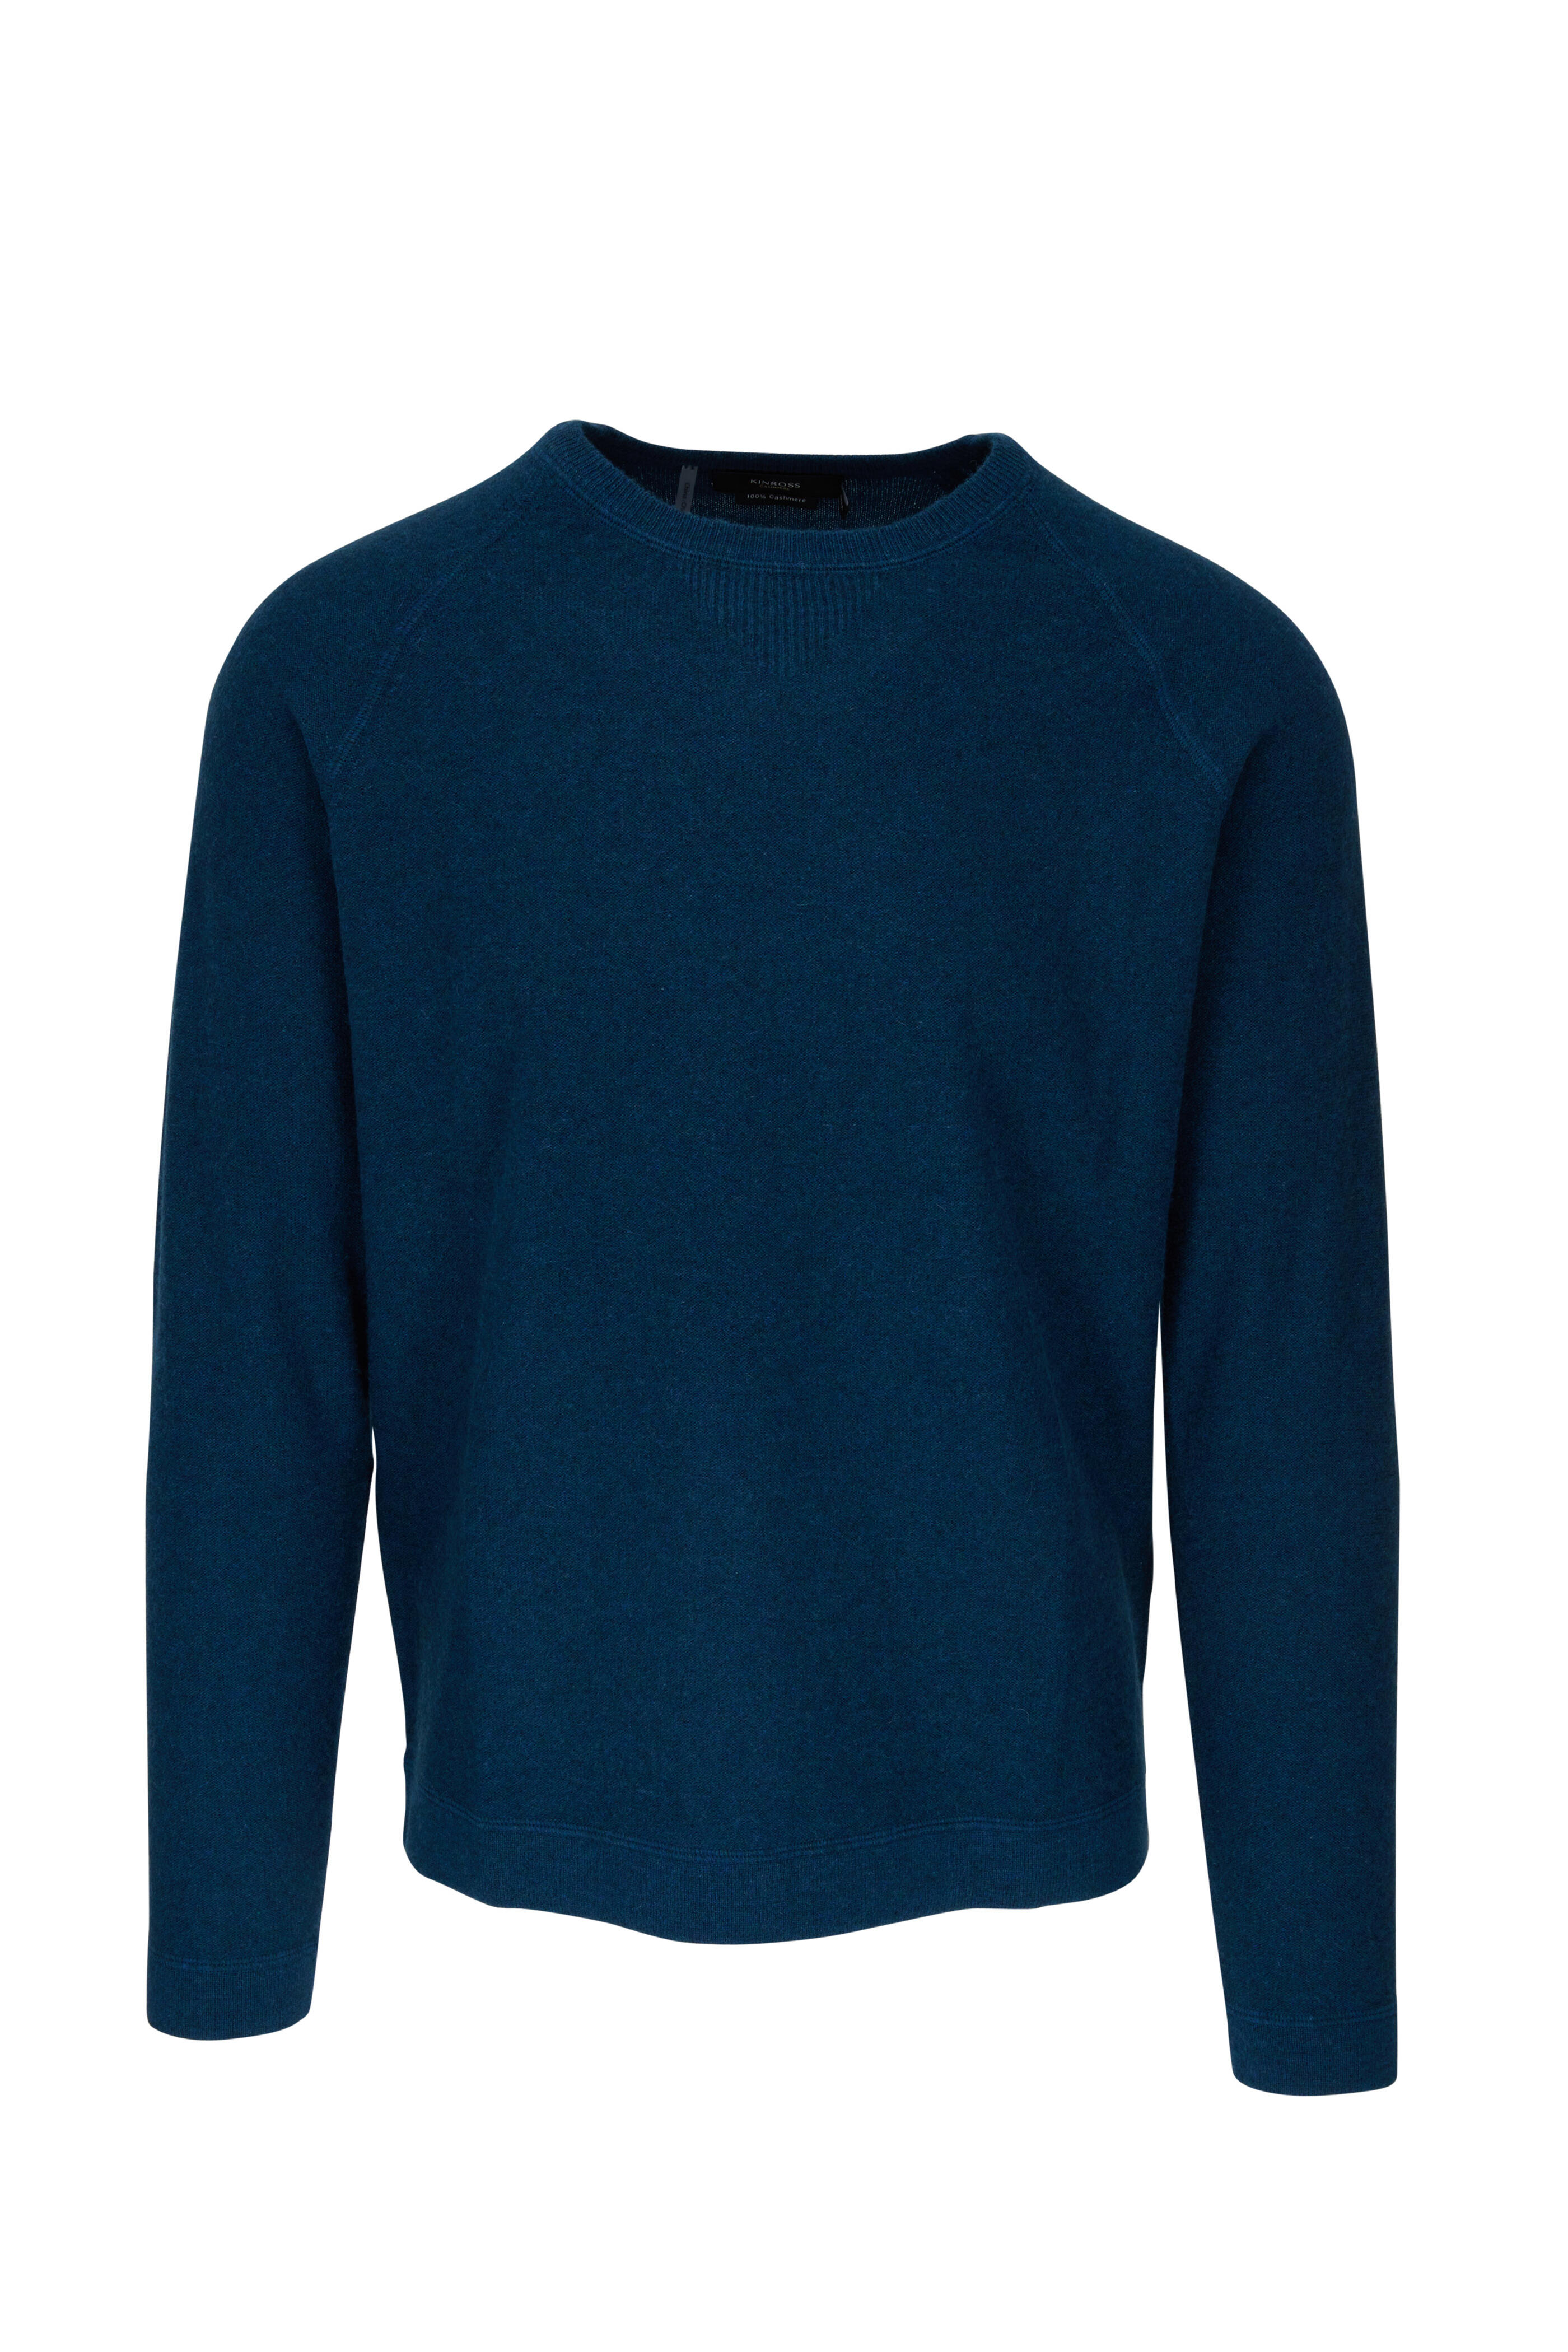 Kinross - Adriatic Cashmere Raglan Sleeve Pullover